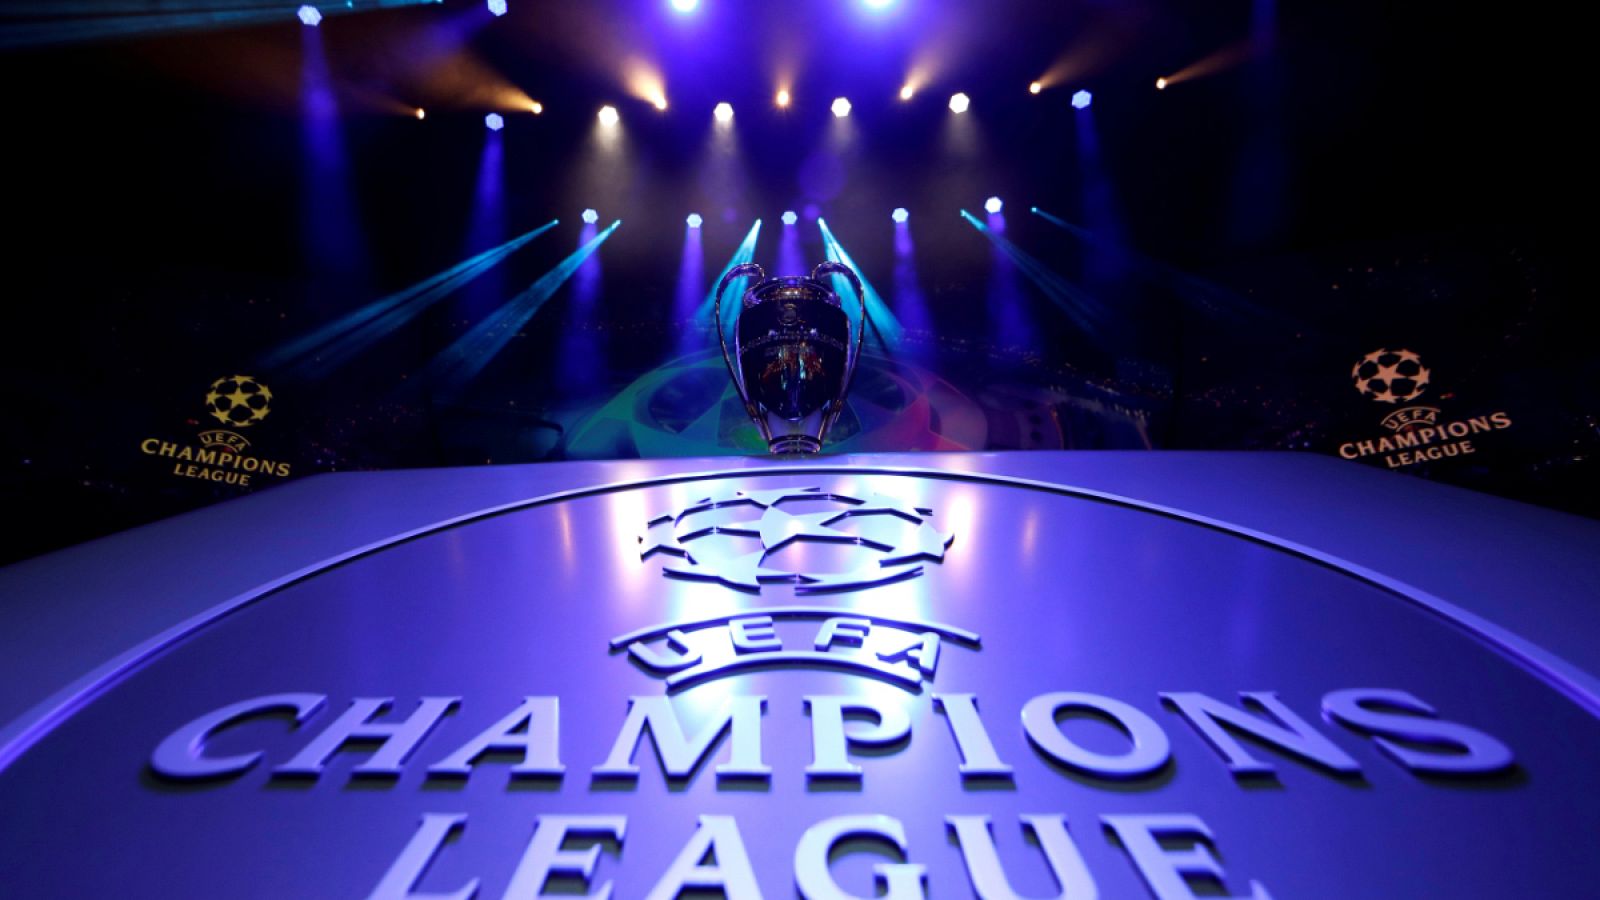 Imagen: El trofeo de la UEFA Champions League